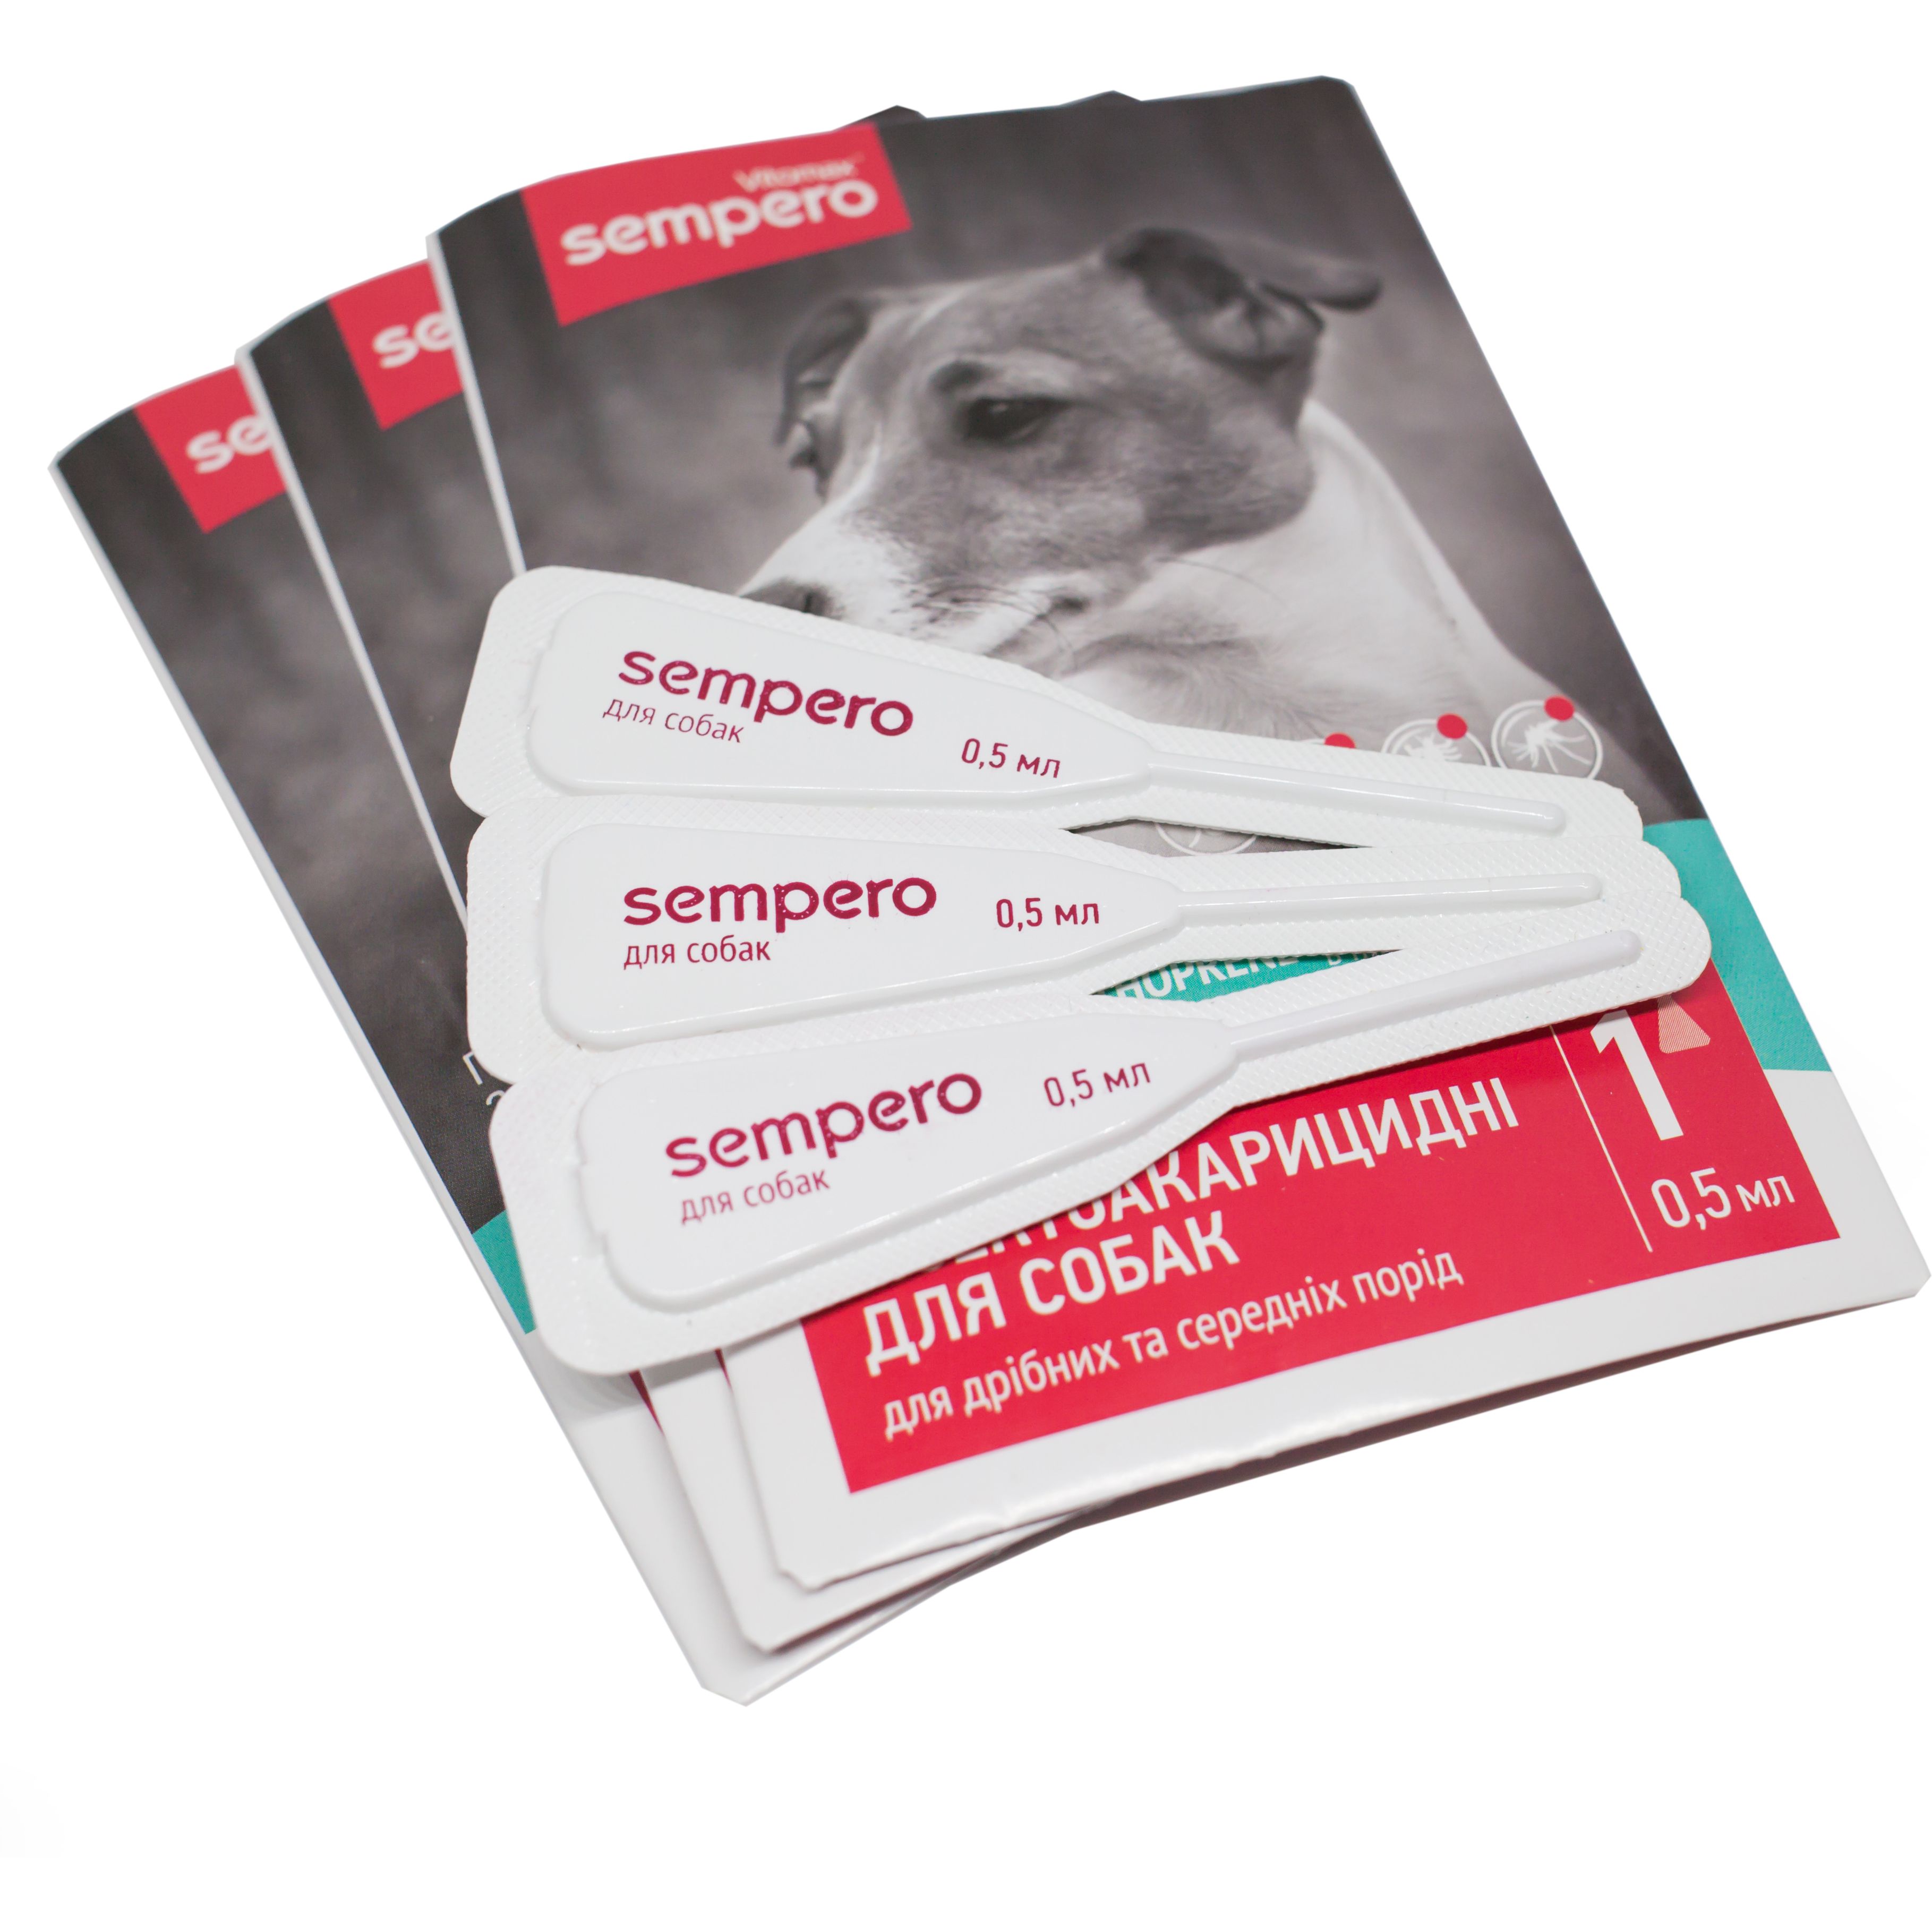 Капли на холку Vitomax Sempero противопаразитарные для собак 3-25 кг, 0.5 мл, 3 пипетки - фото 2